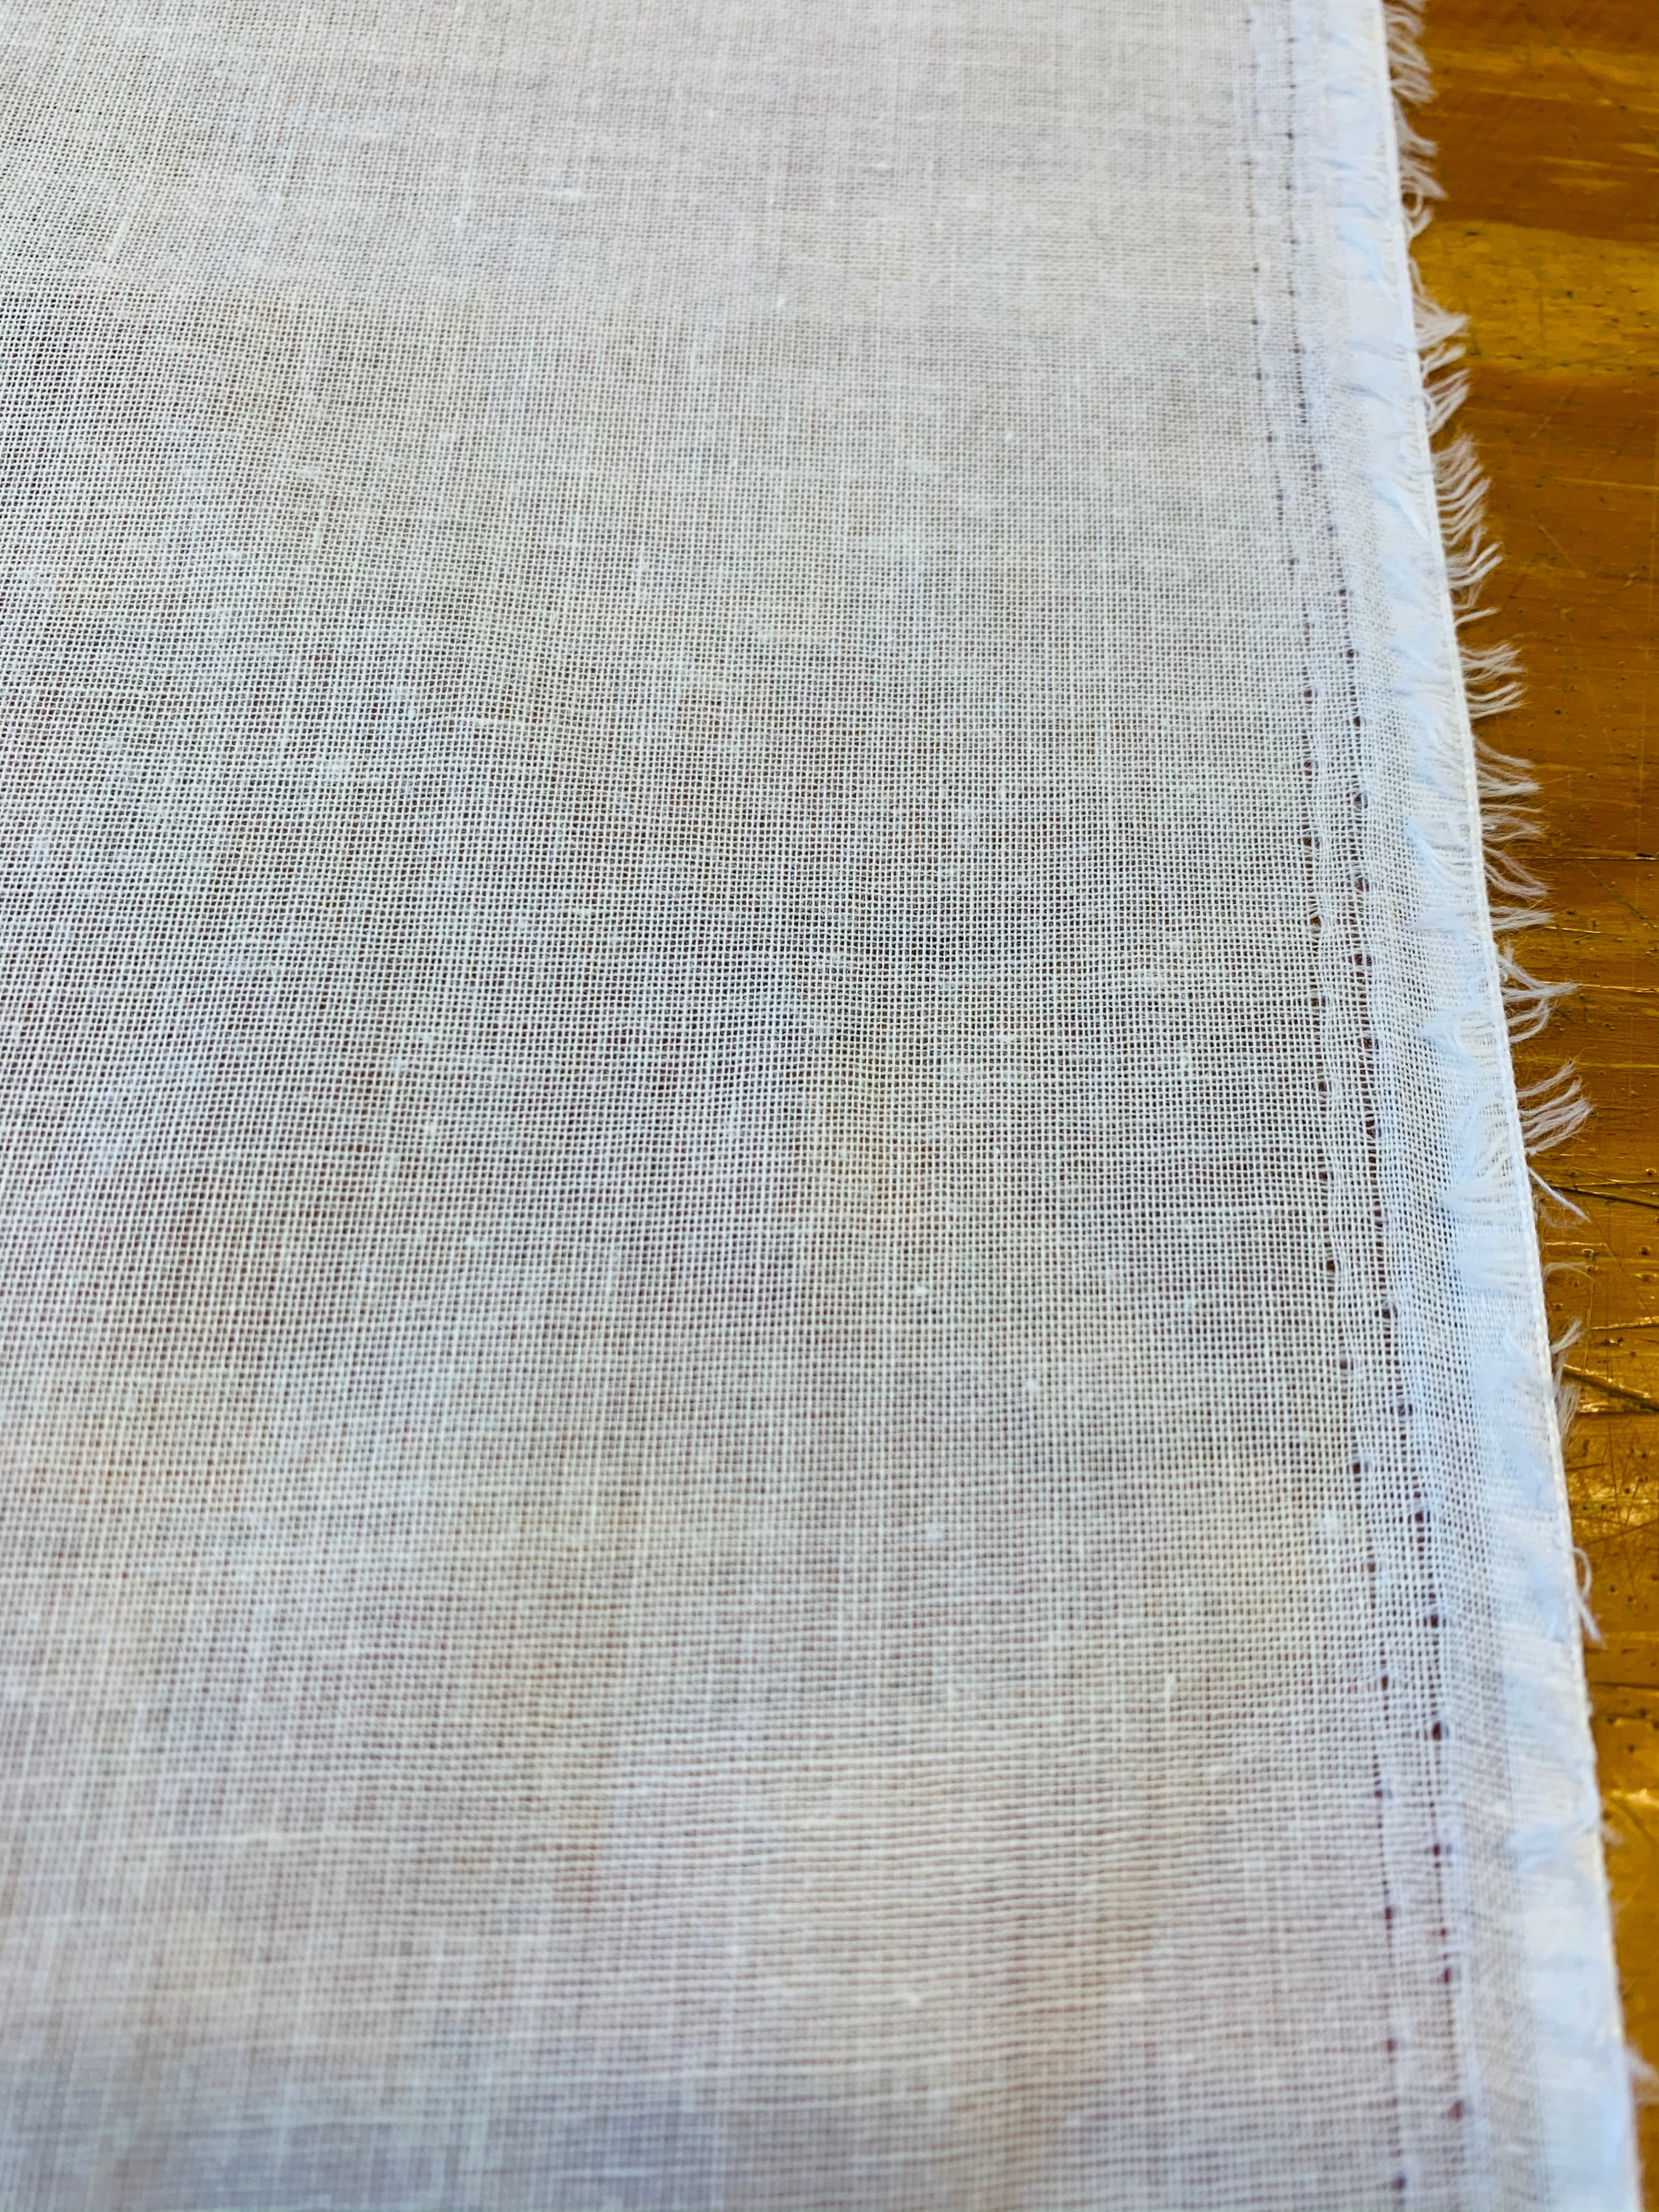 Iron On Fusible Interfacing Interlining Sewing Fabric Buckram